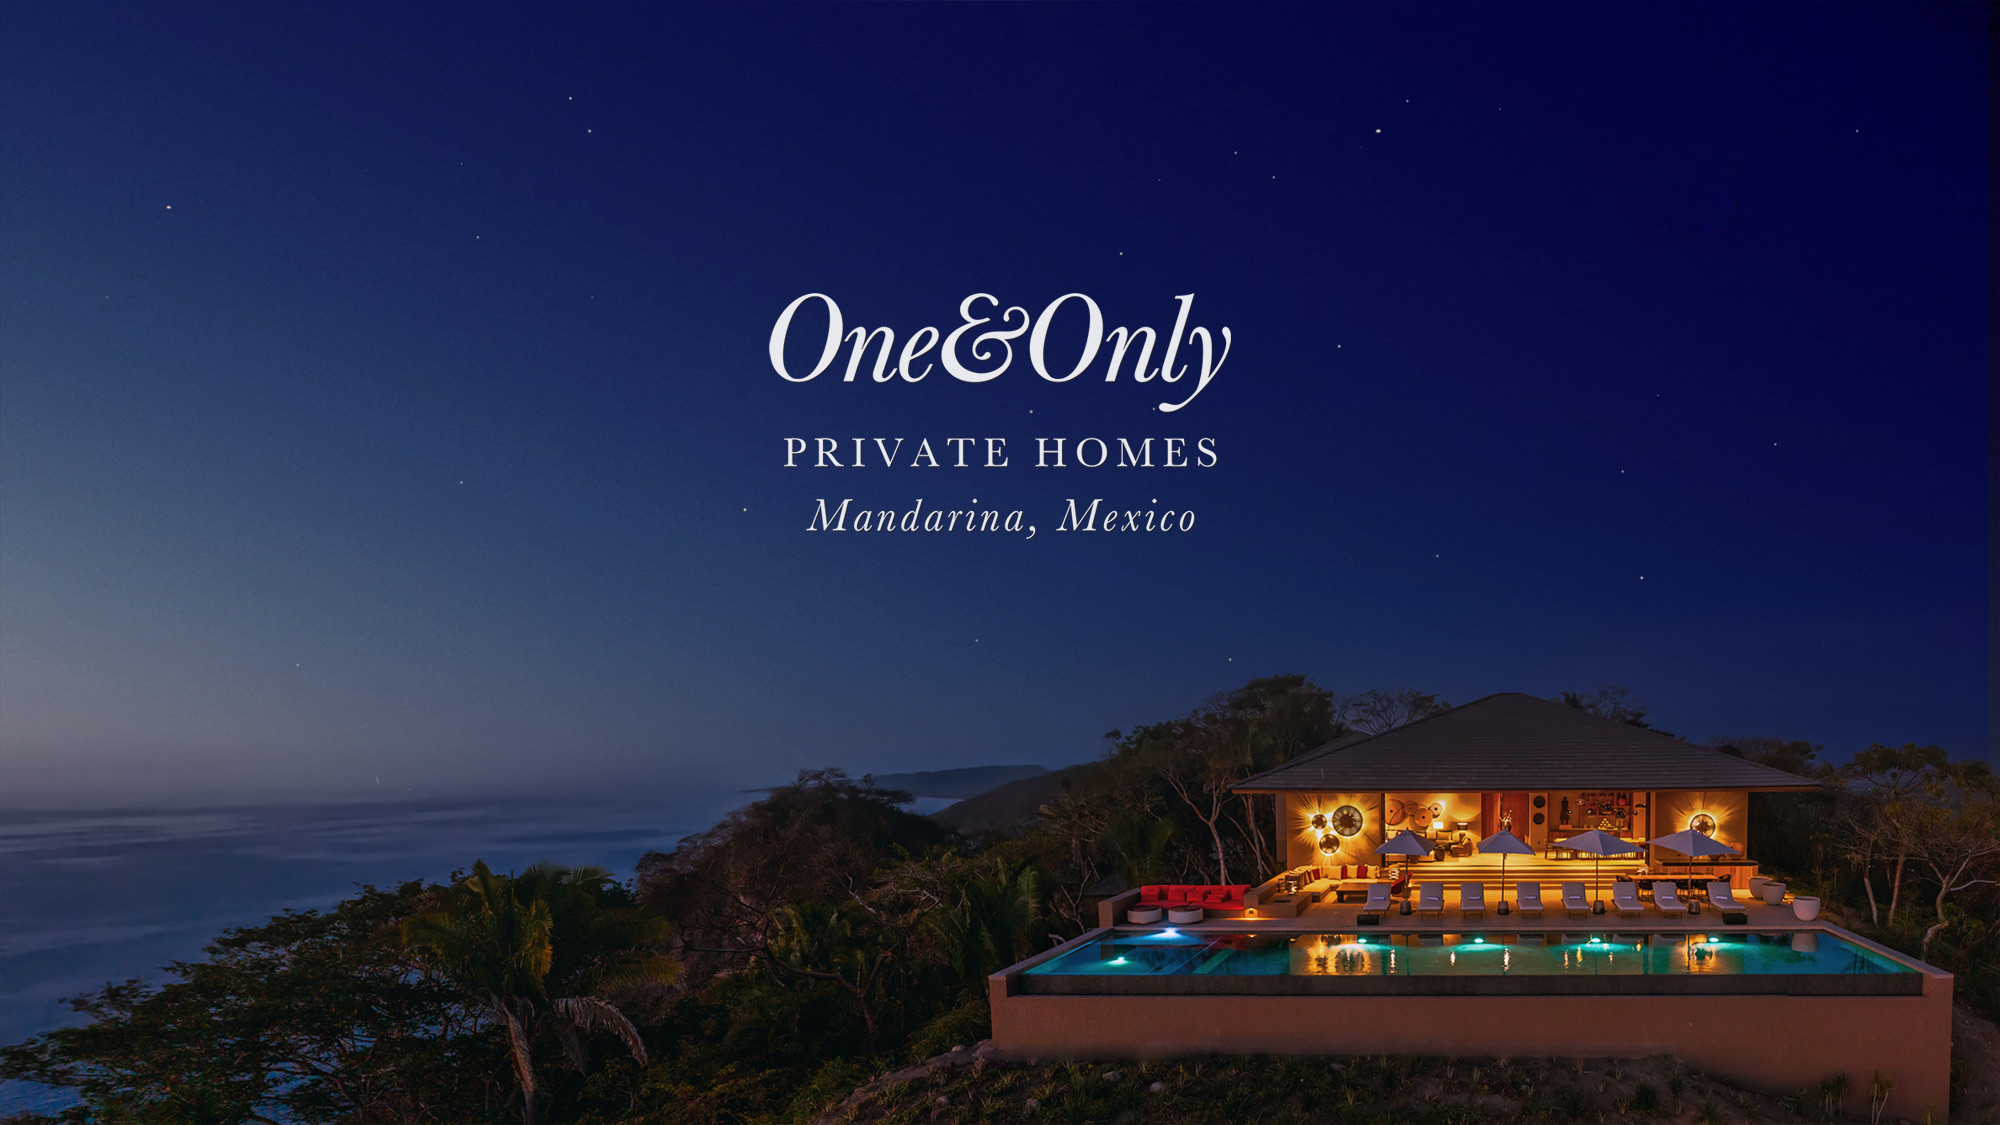 One & Only Mandarina - Riviera Nayarit, Mexico - One&Only Residences - Punta de Mita